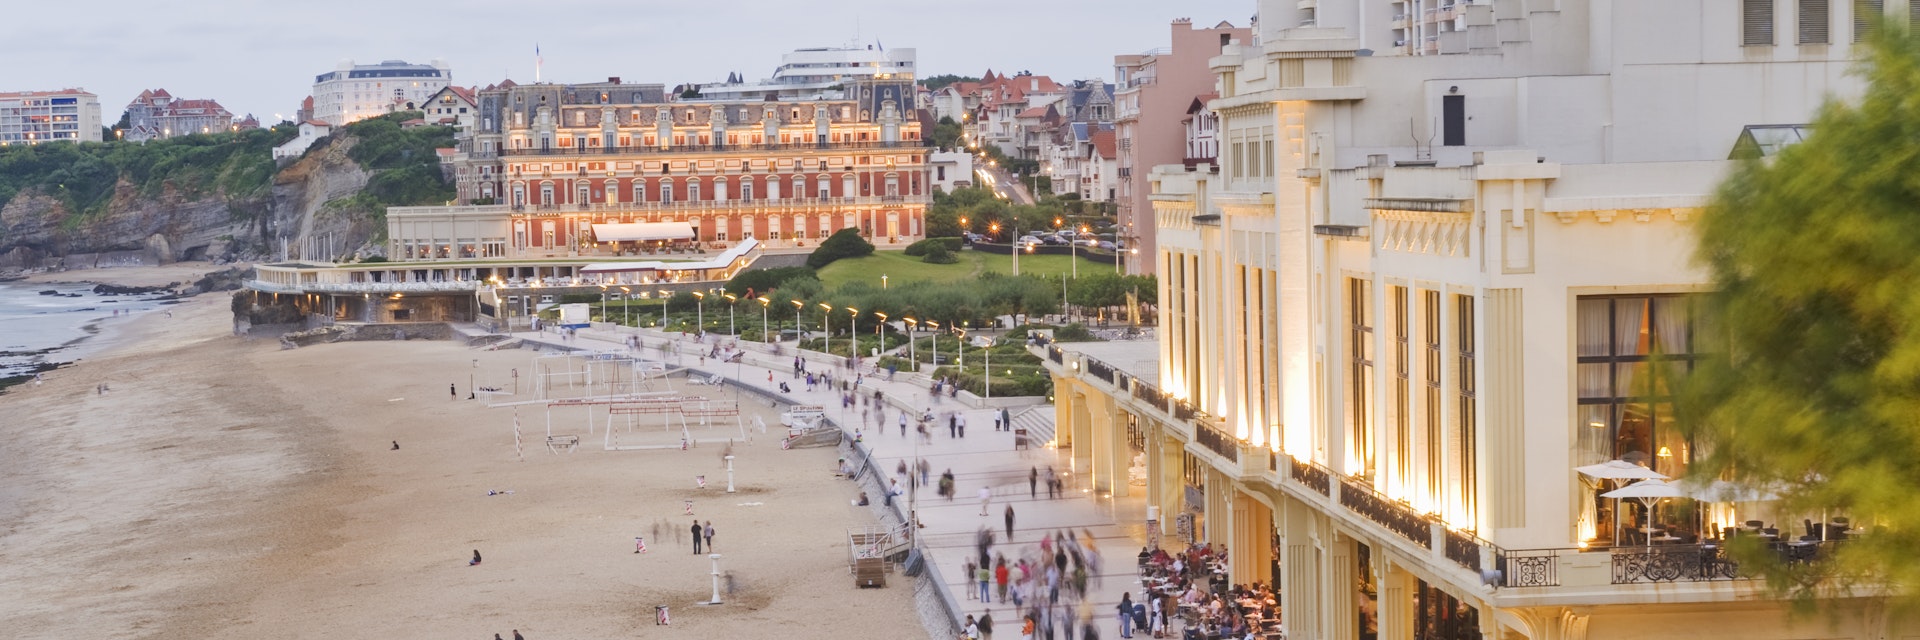 Promenade, Grande Plage, Biarritz, France